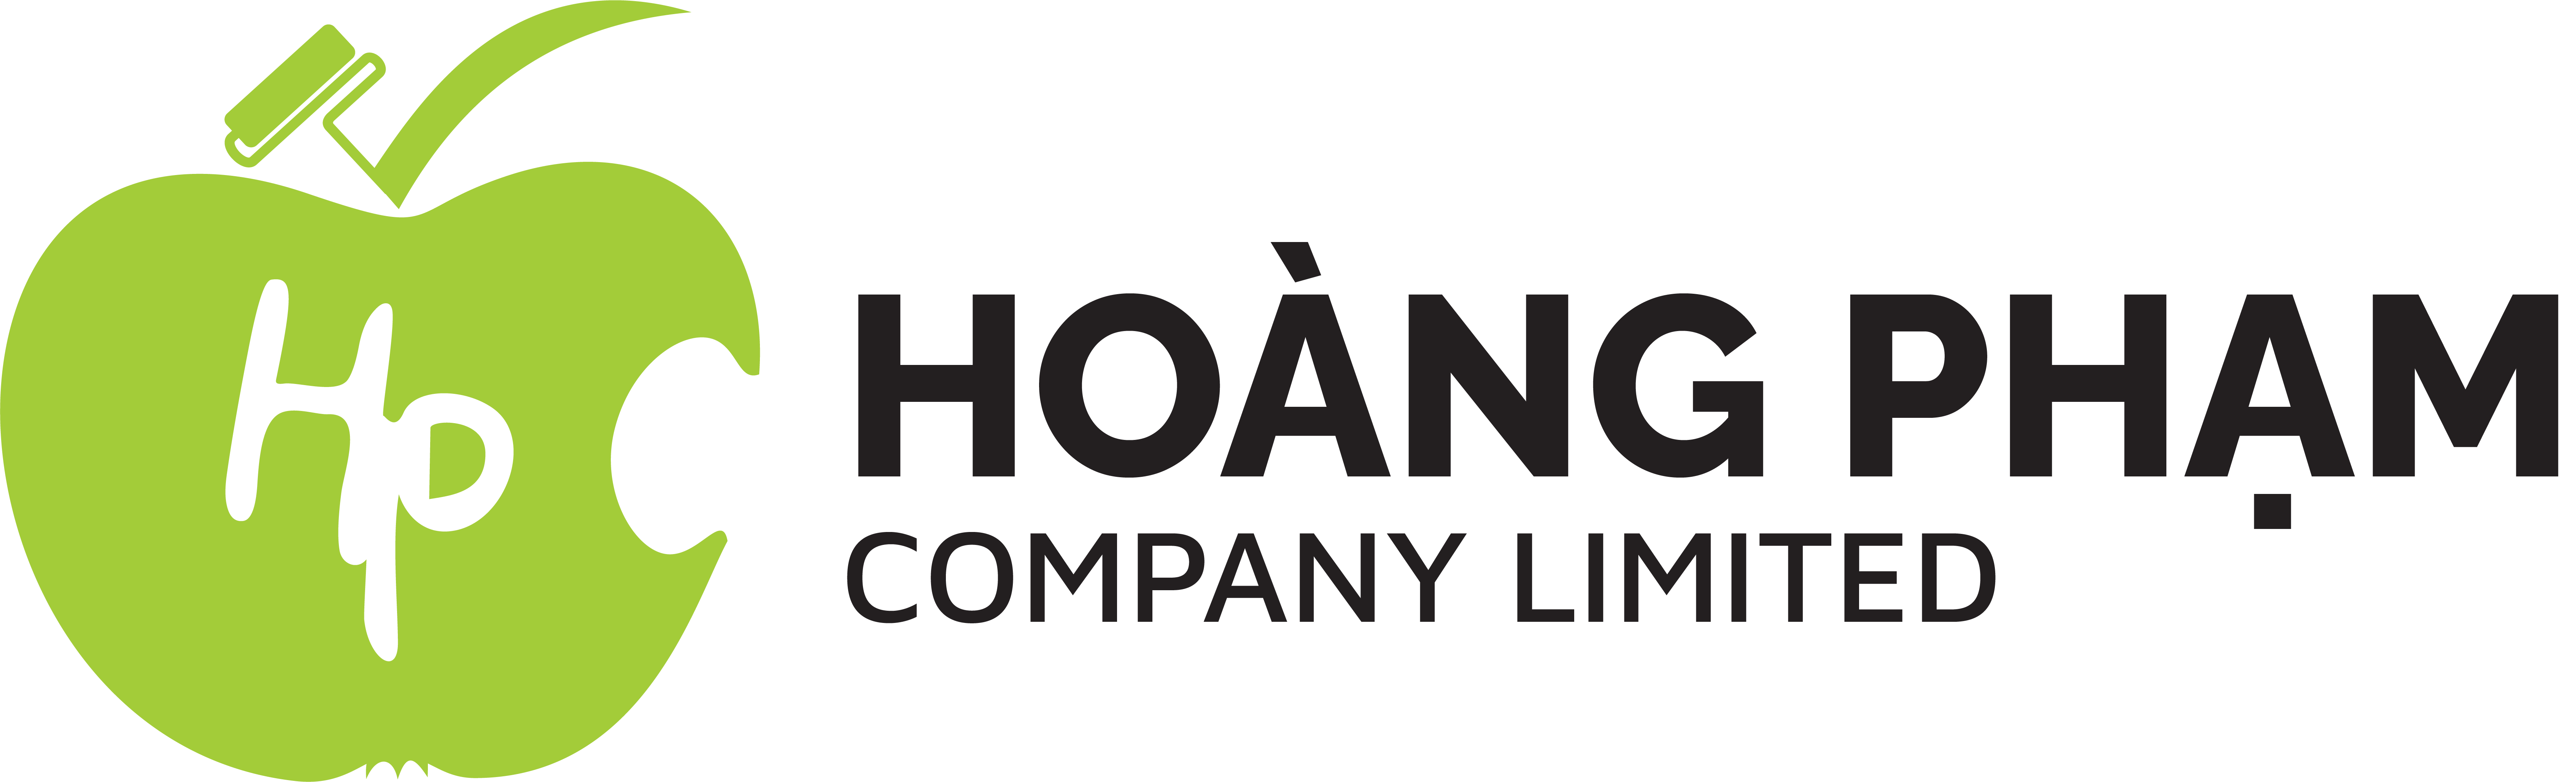 Hoang Pham Company Ltd.